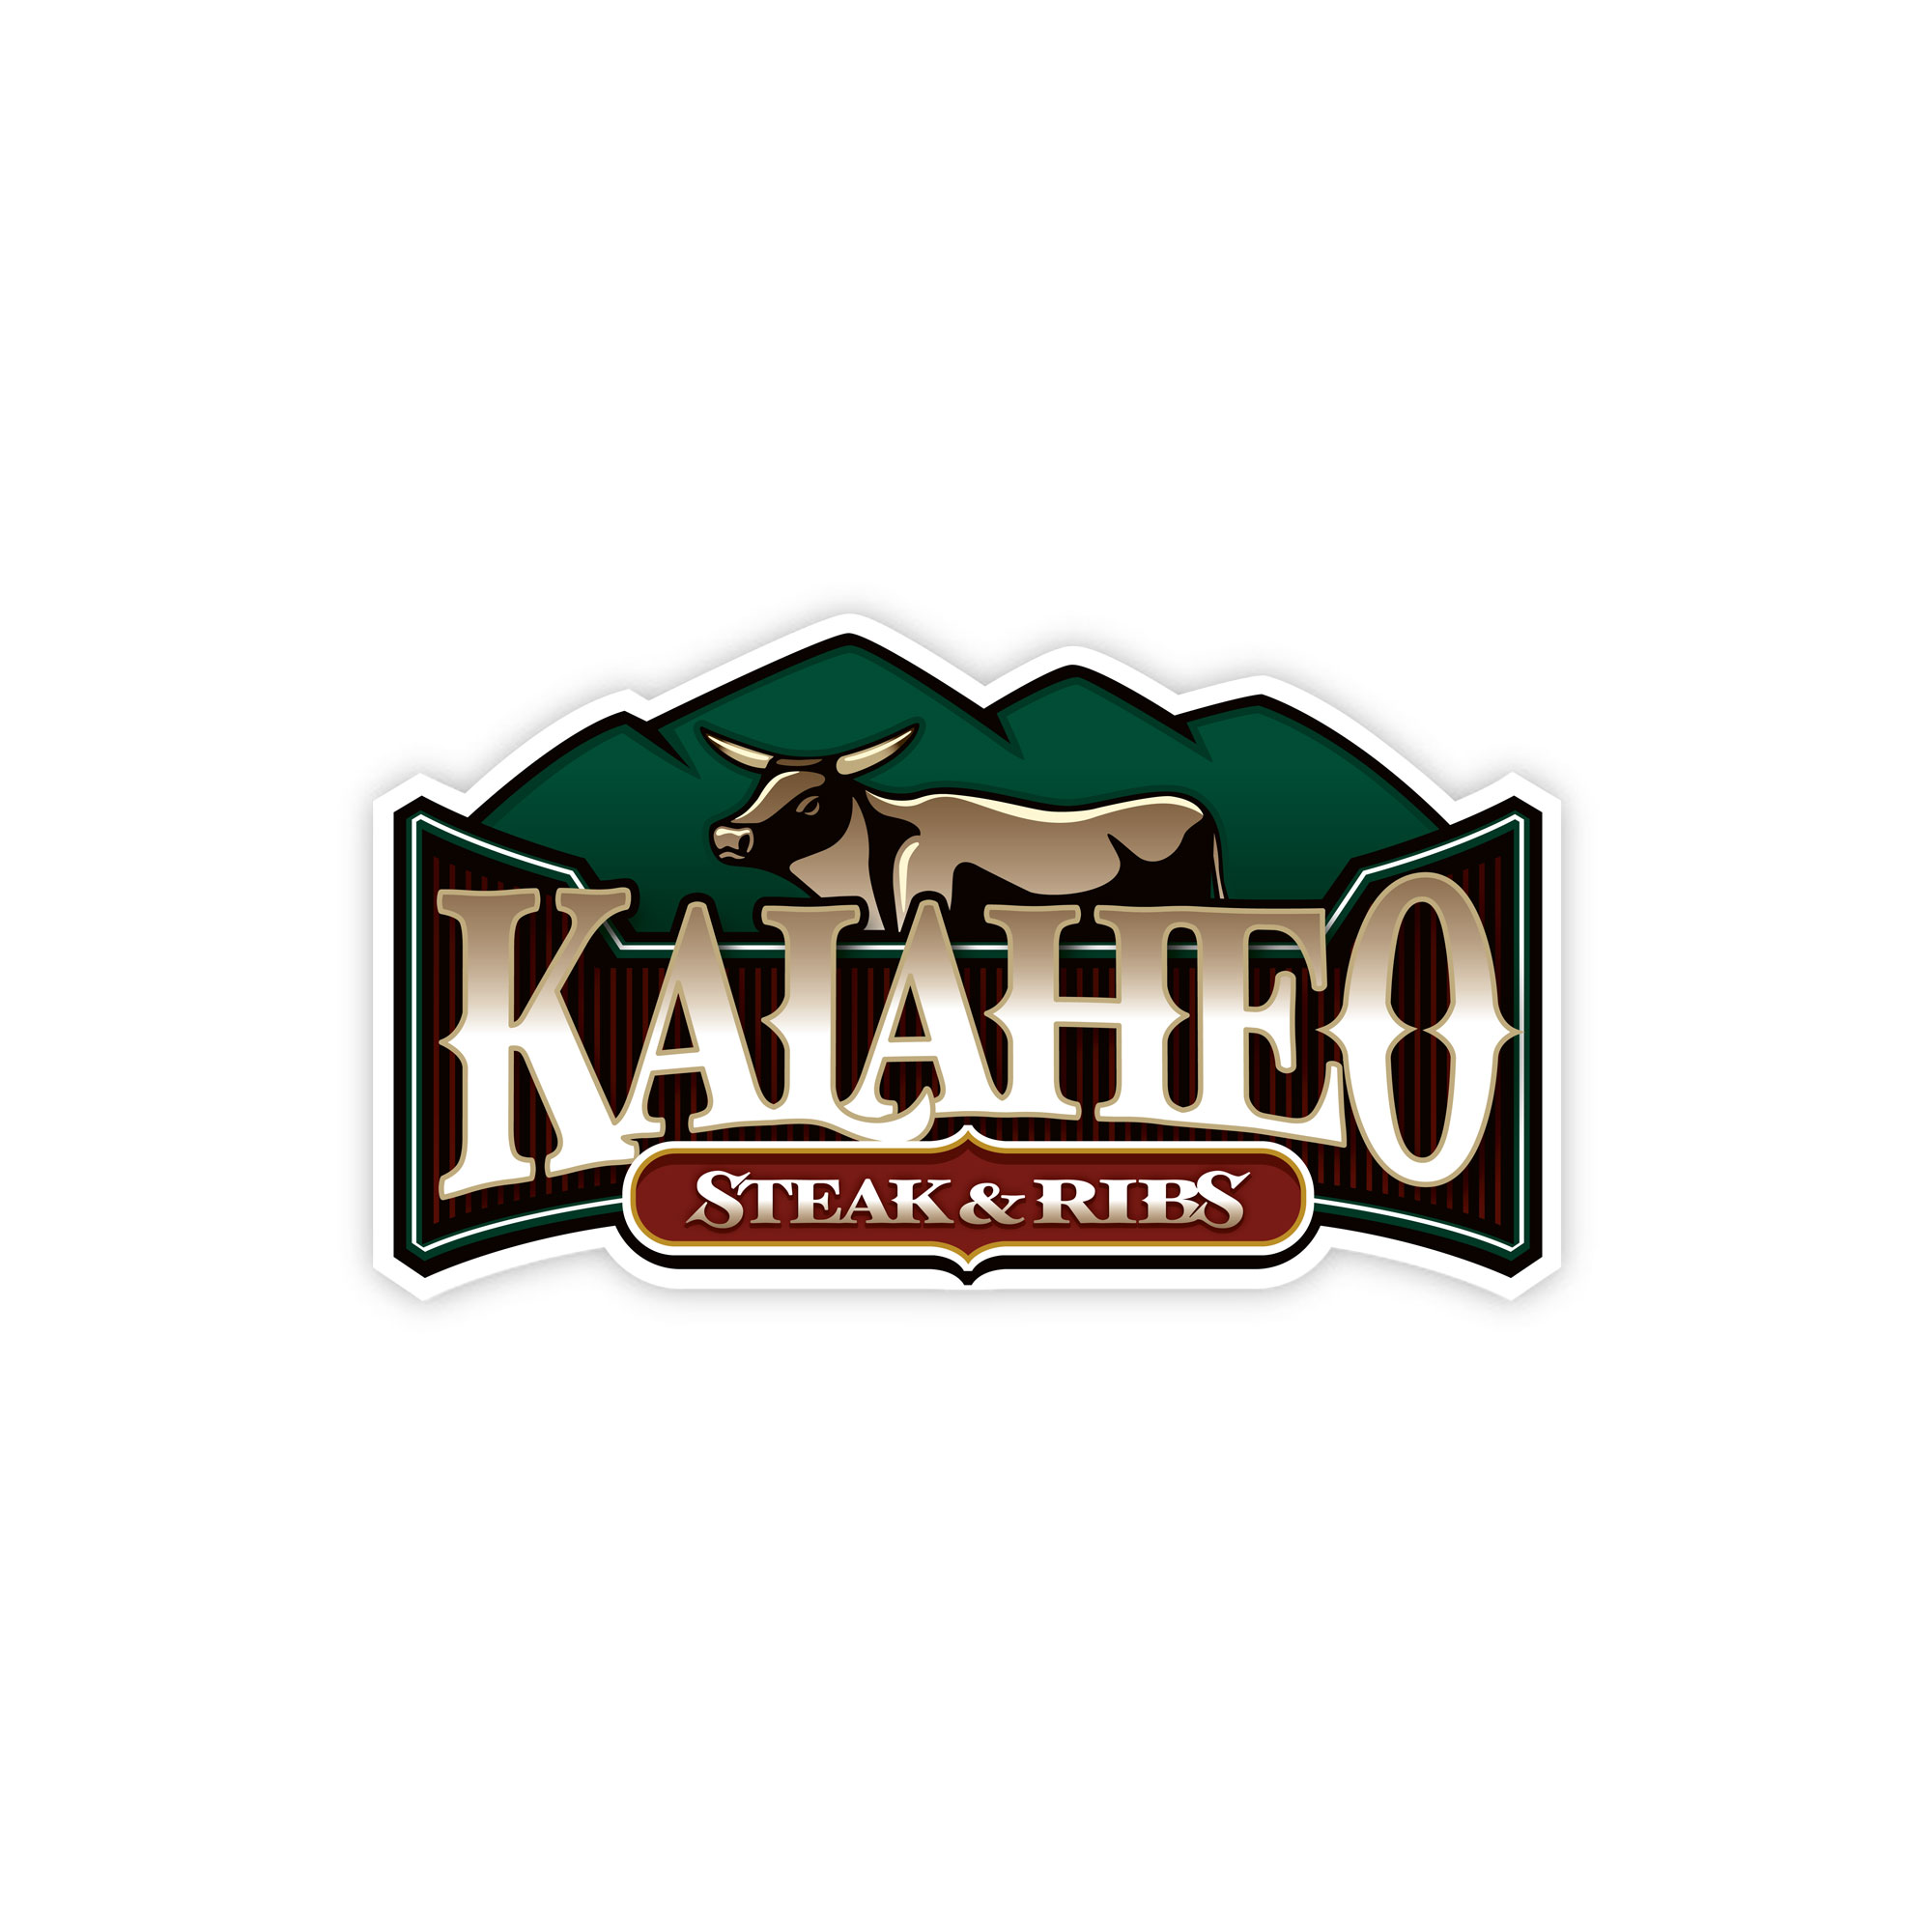 Kalaheo Steak & Ribs Logo Design